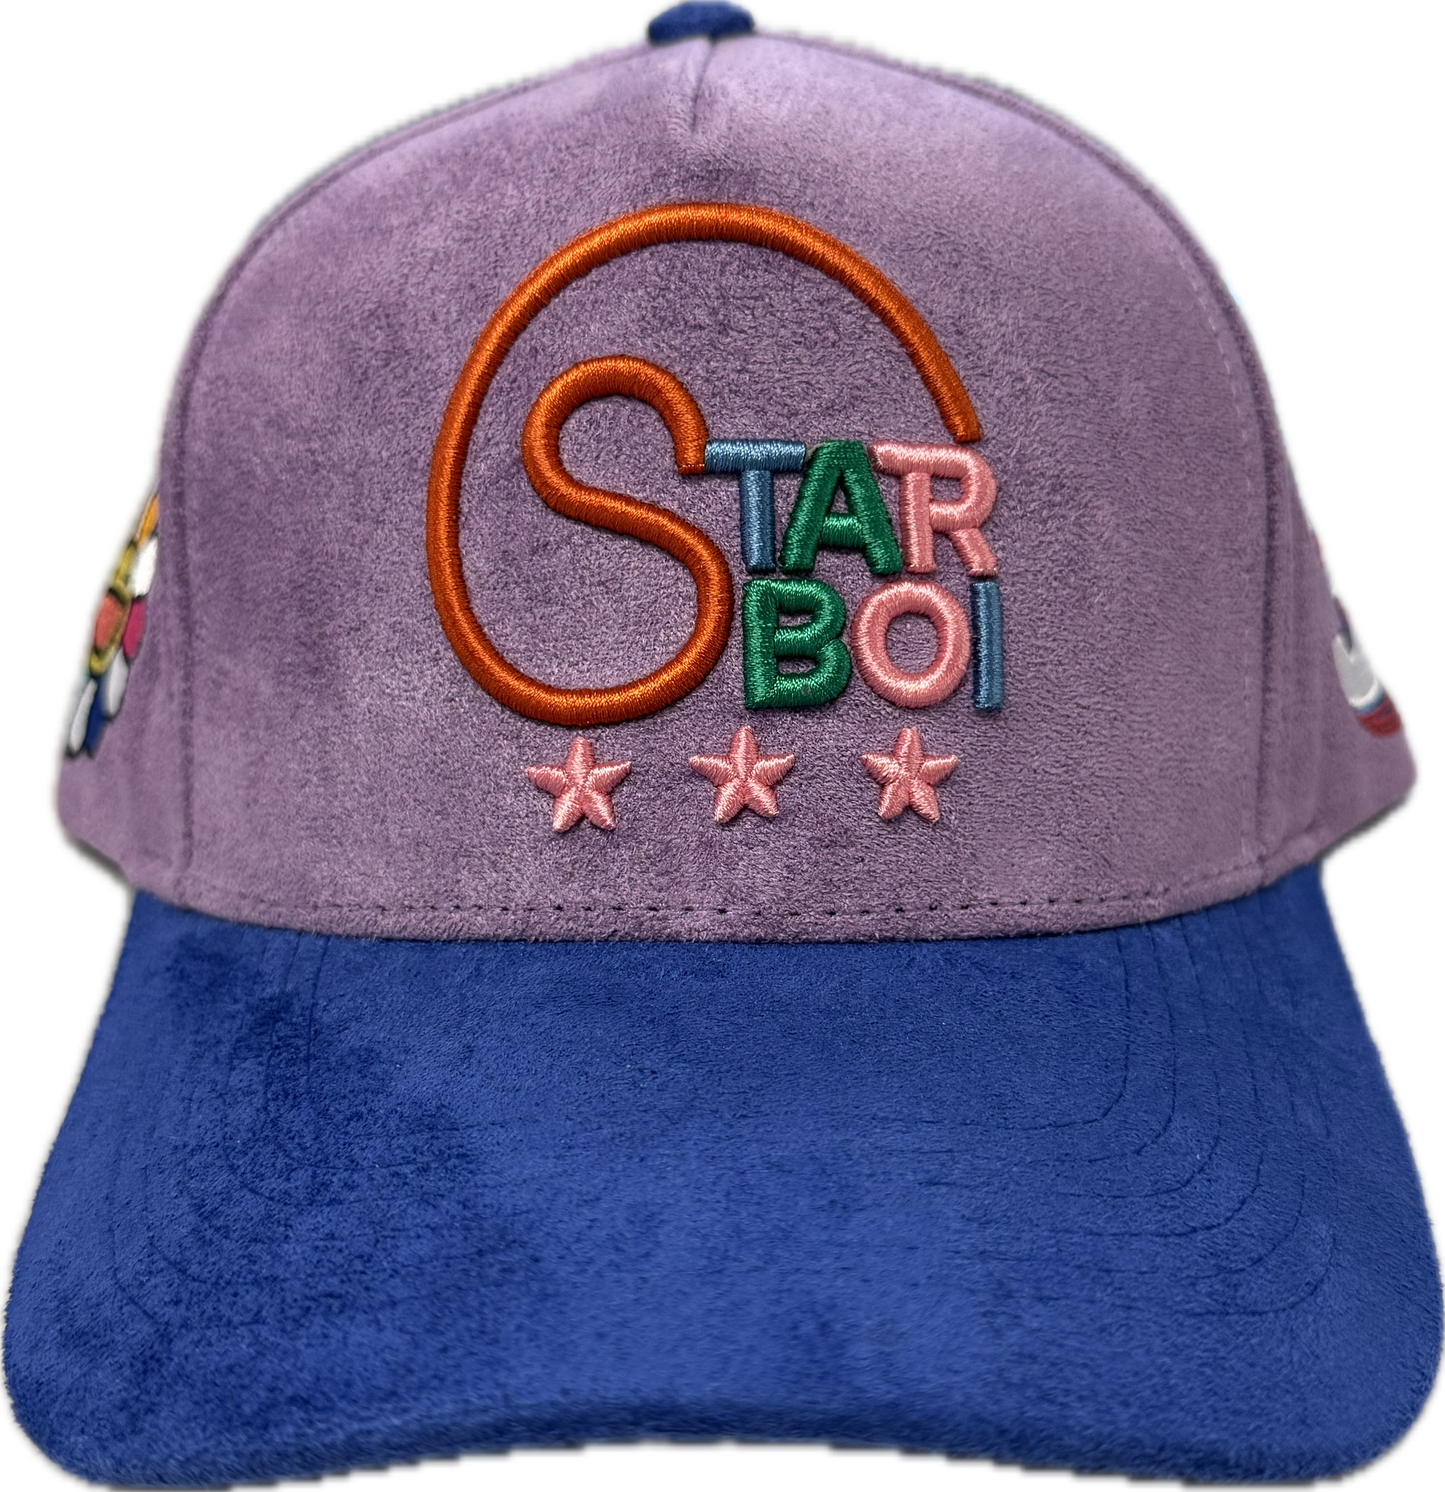 STARBOI purple/blue Hat